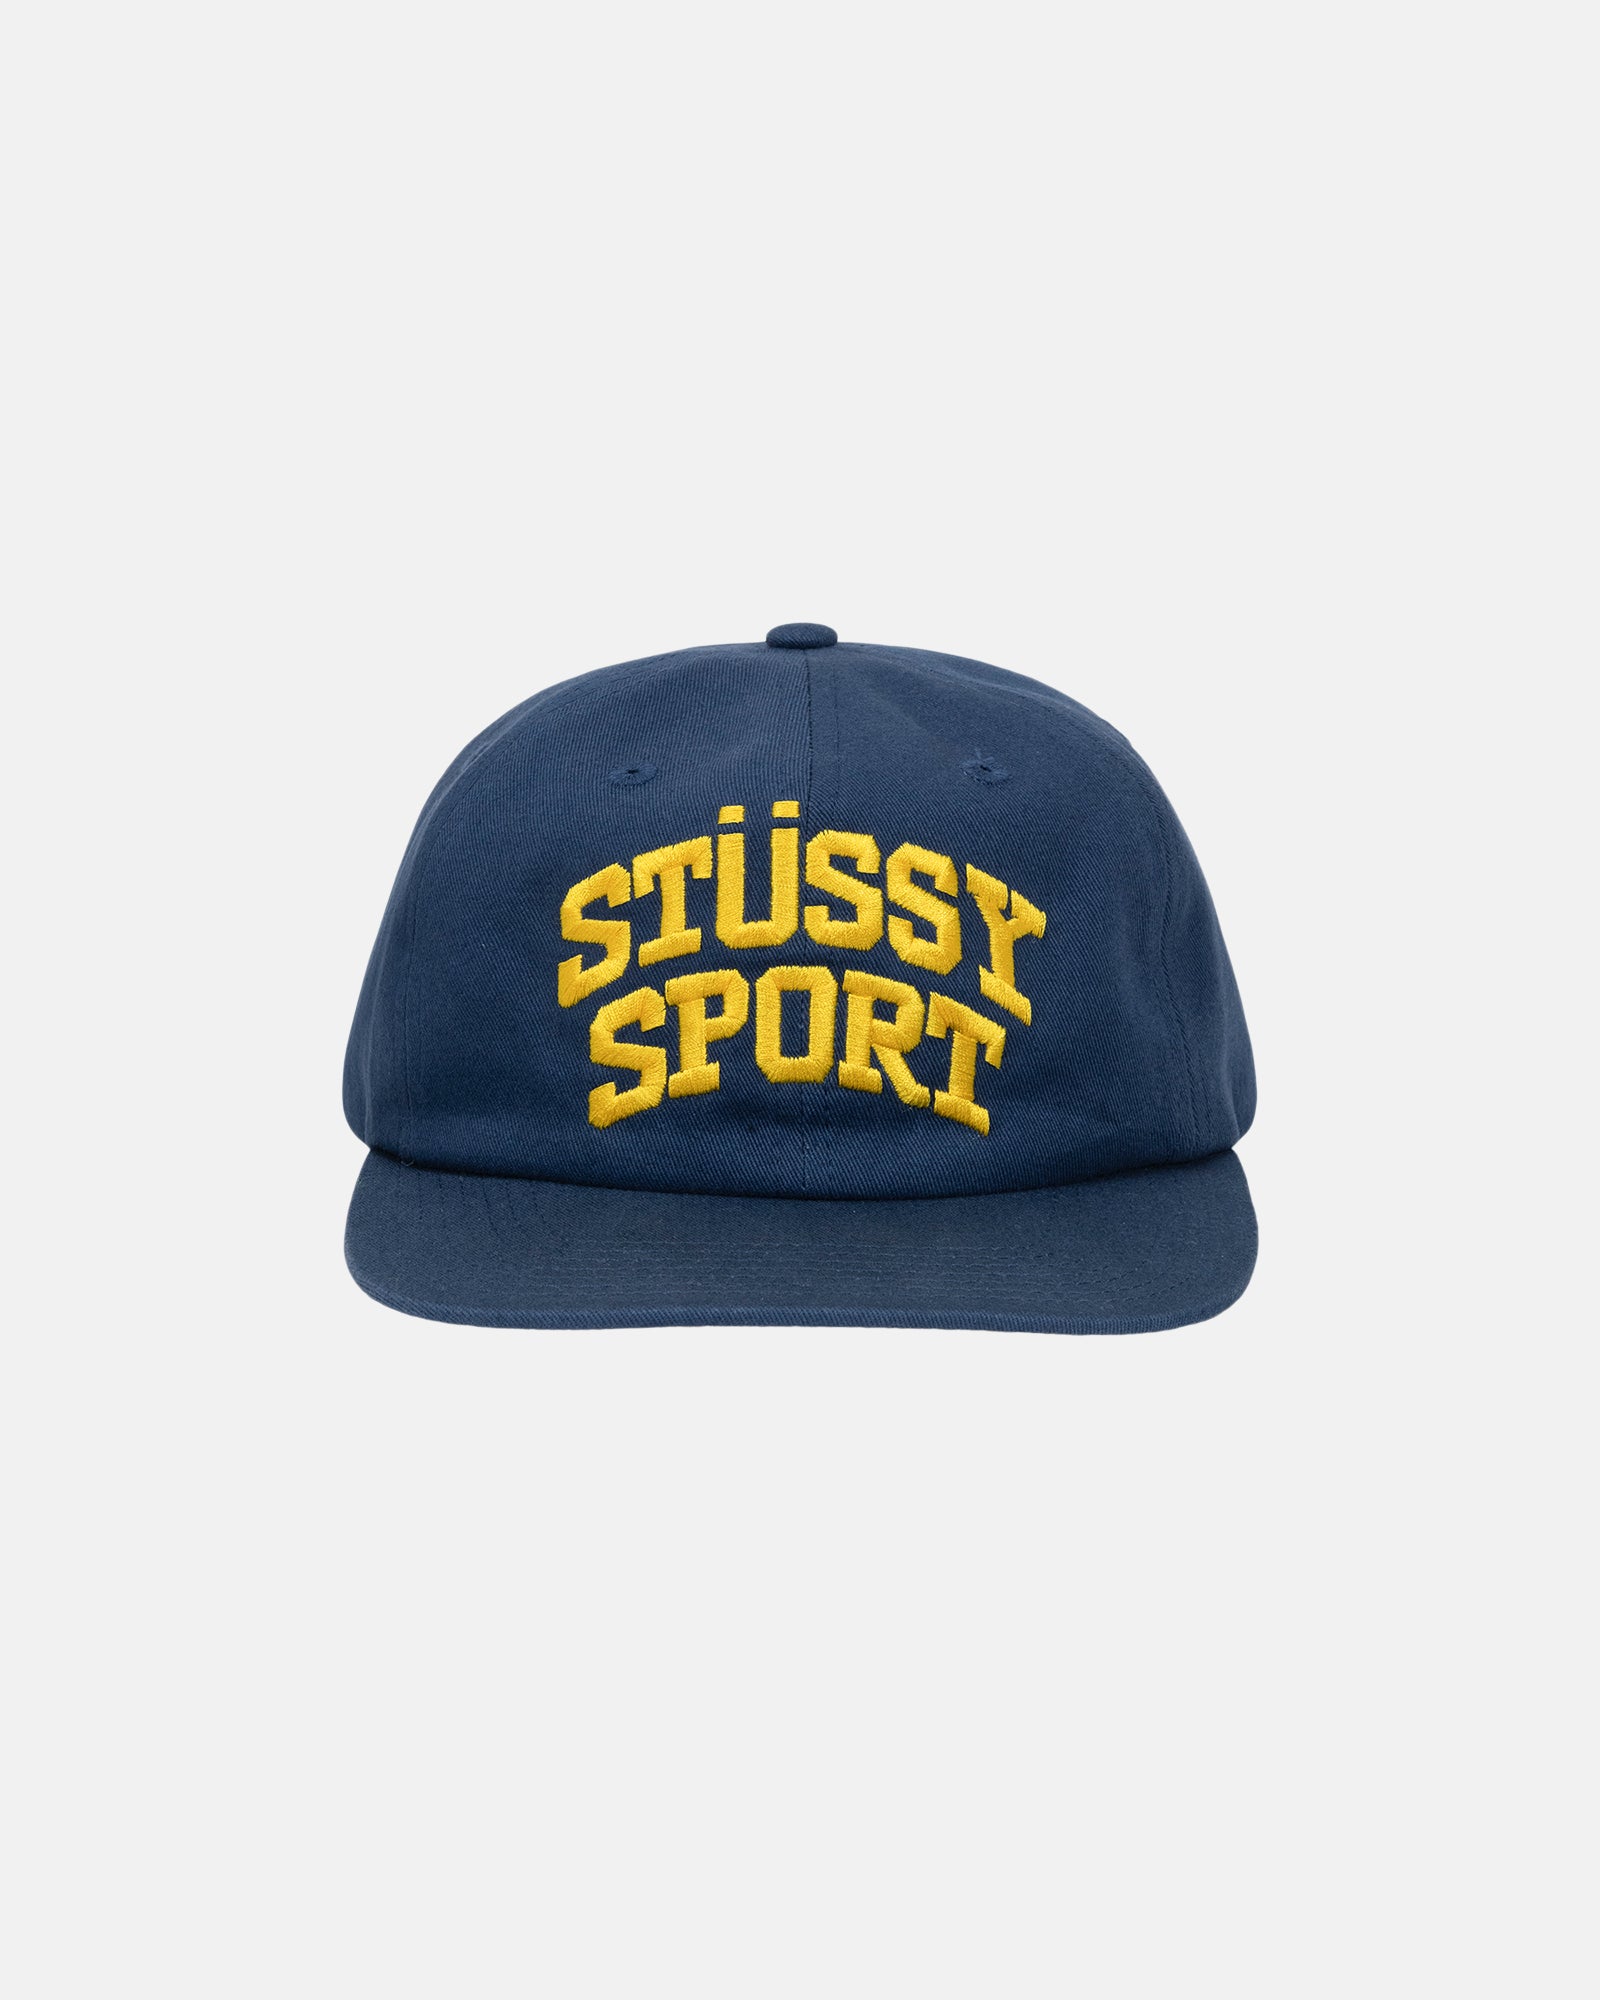 STUSSY SPORT CAP